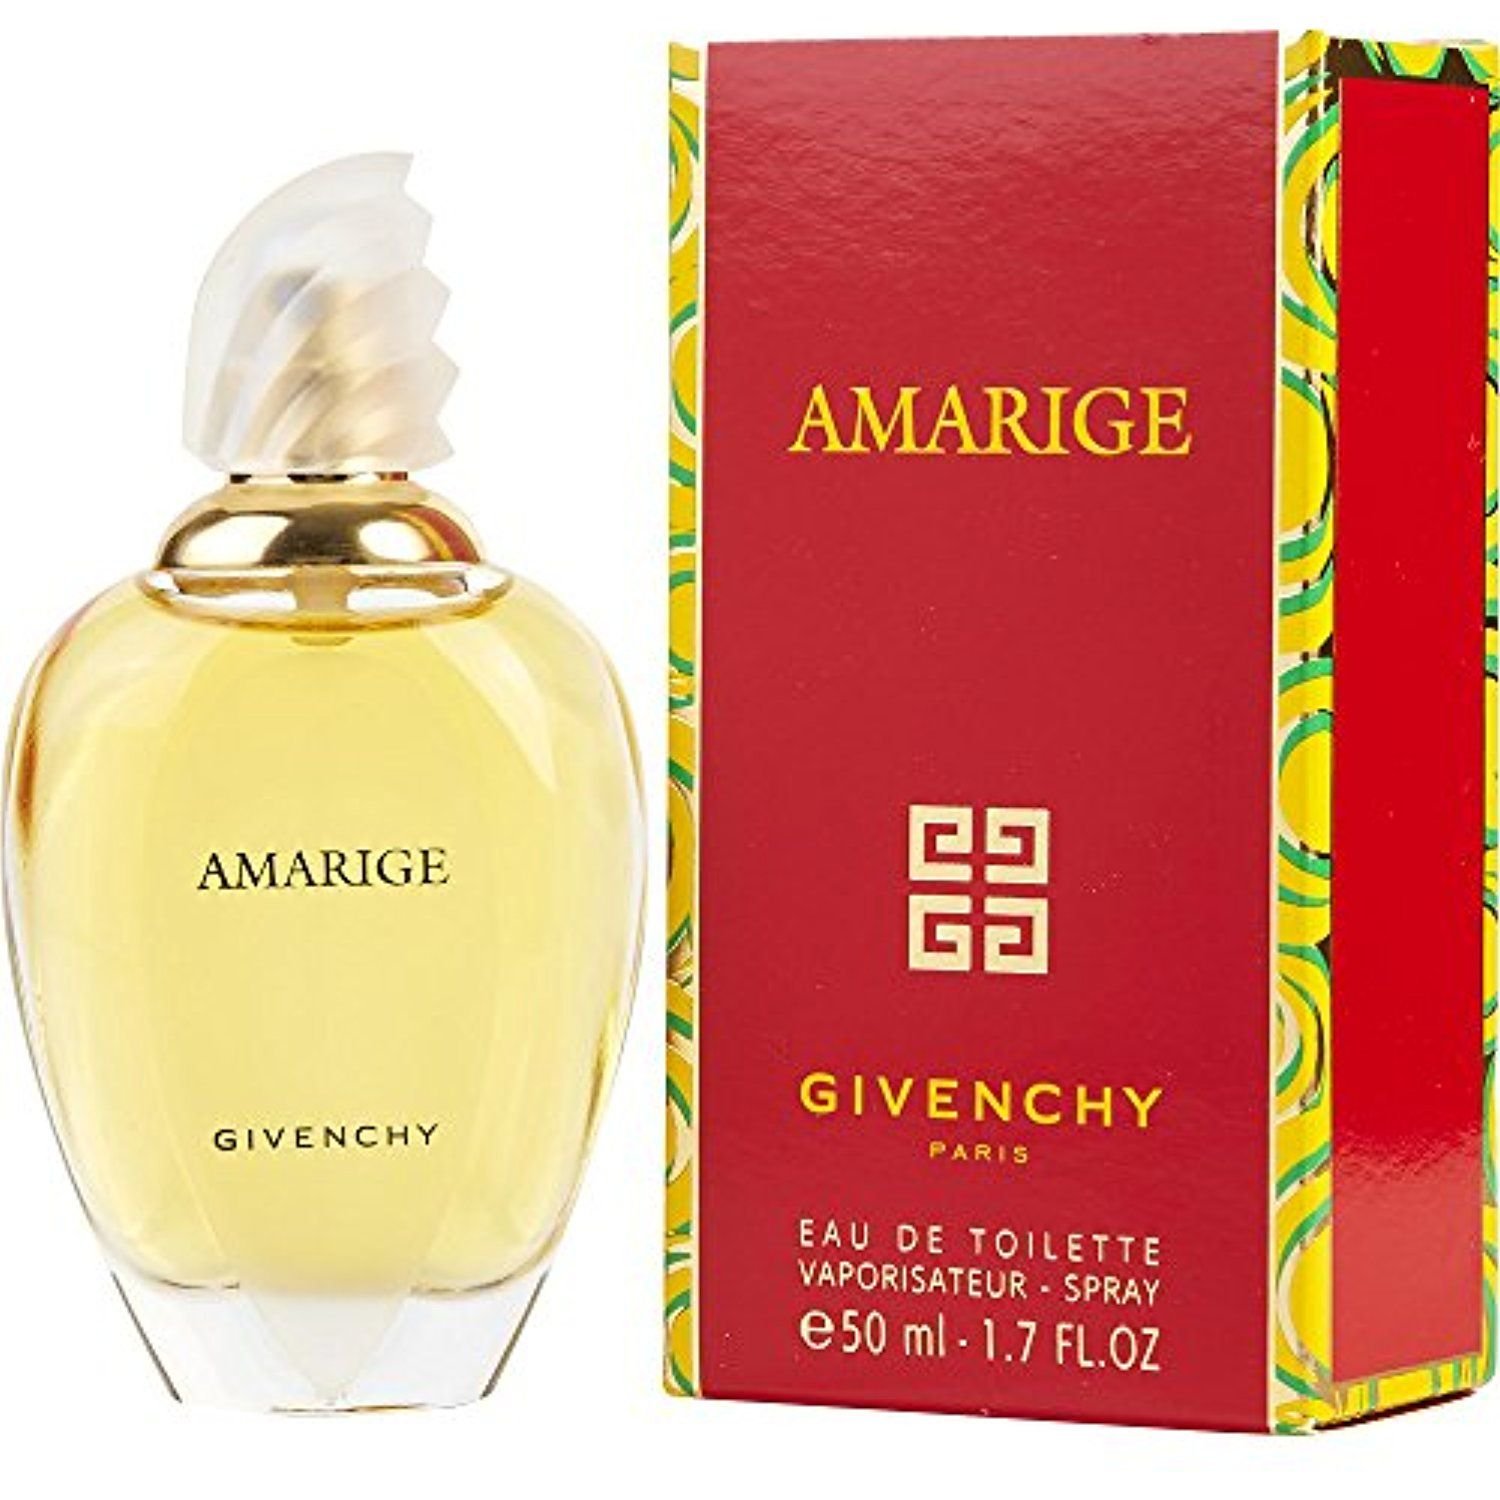 Planet Perfume - Givenchy Amarige : Super Deals